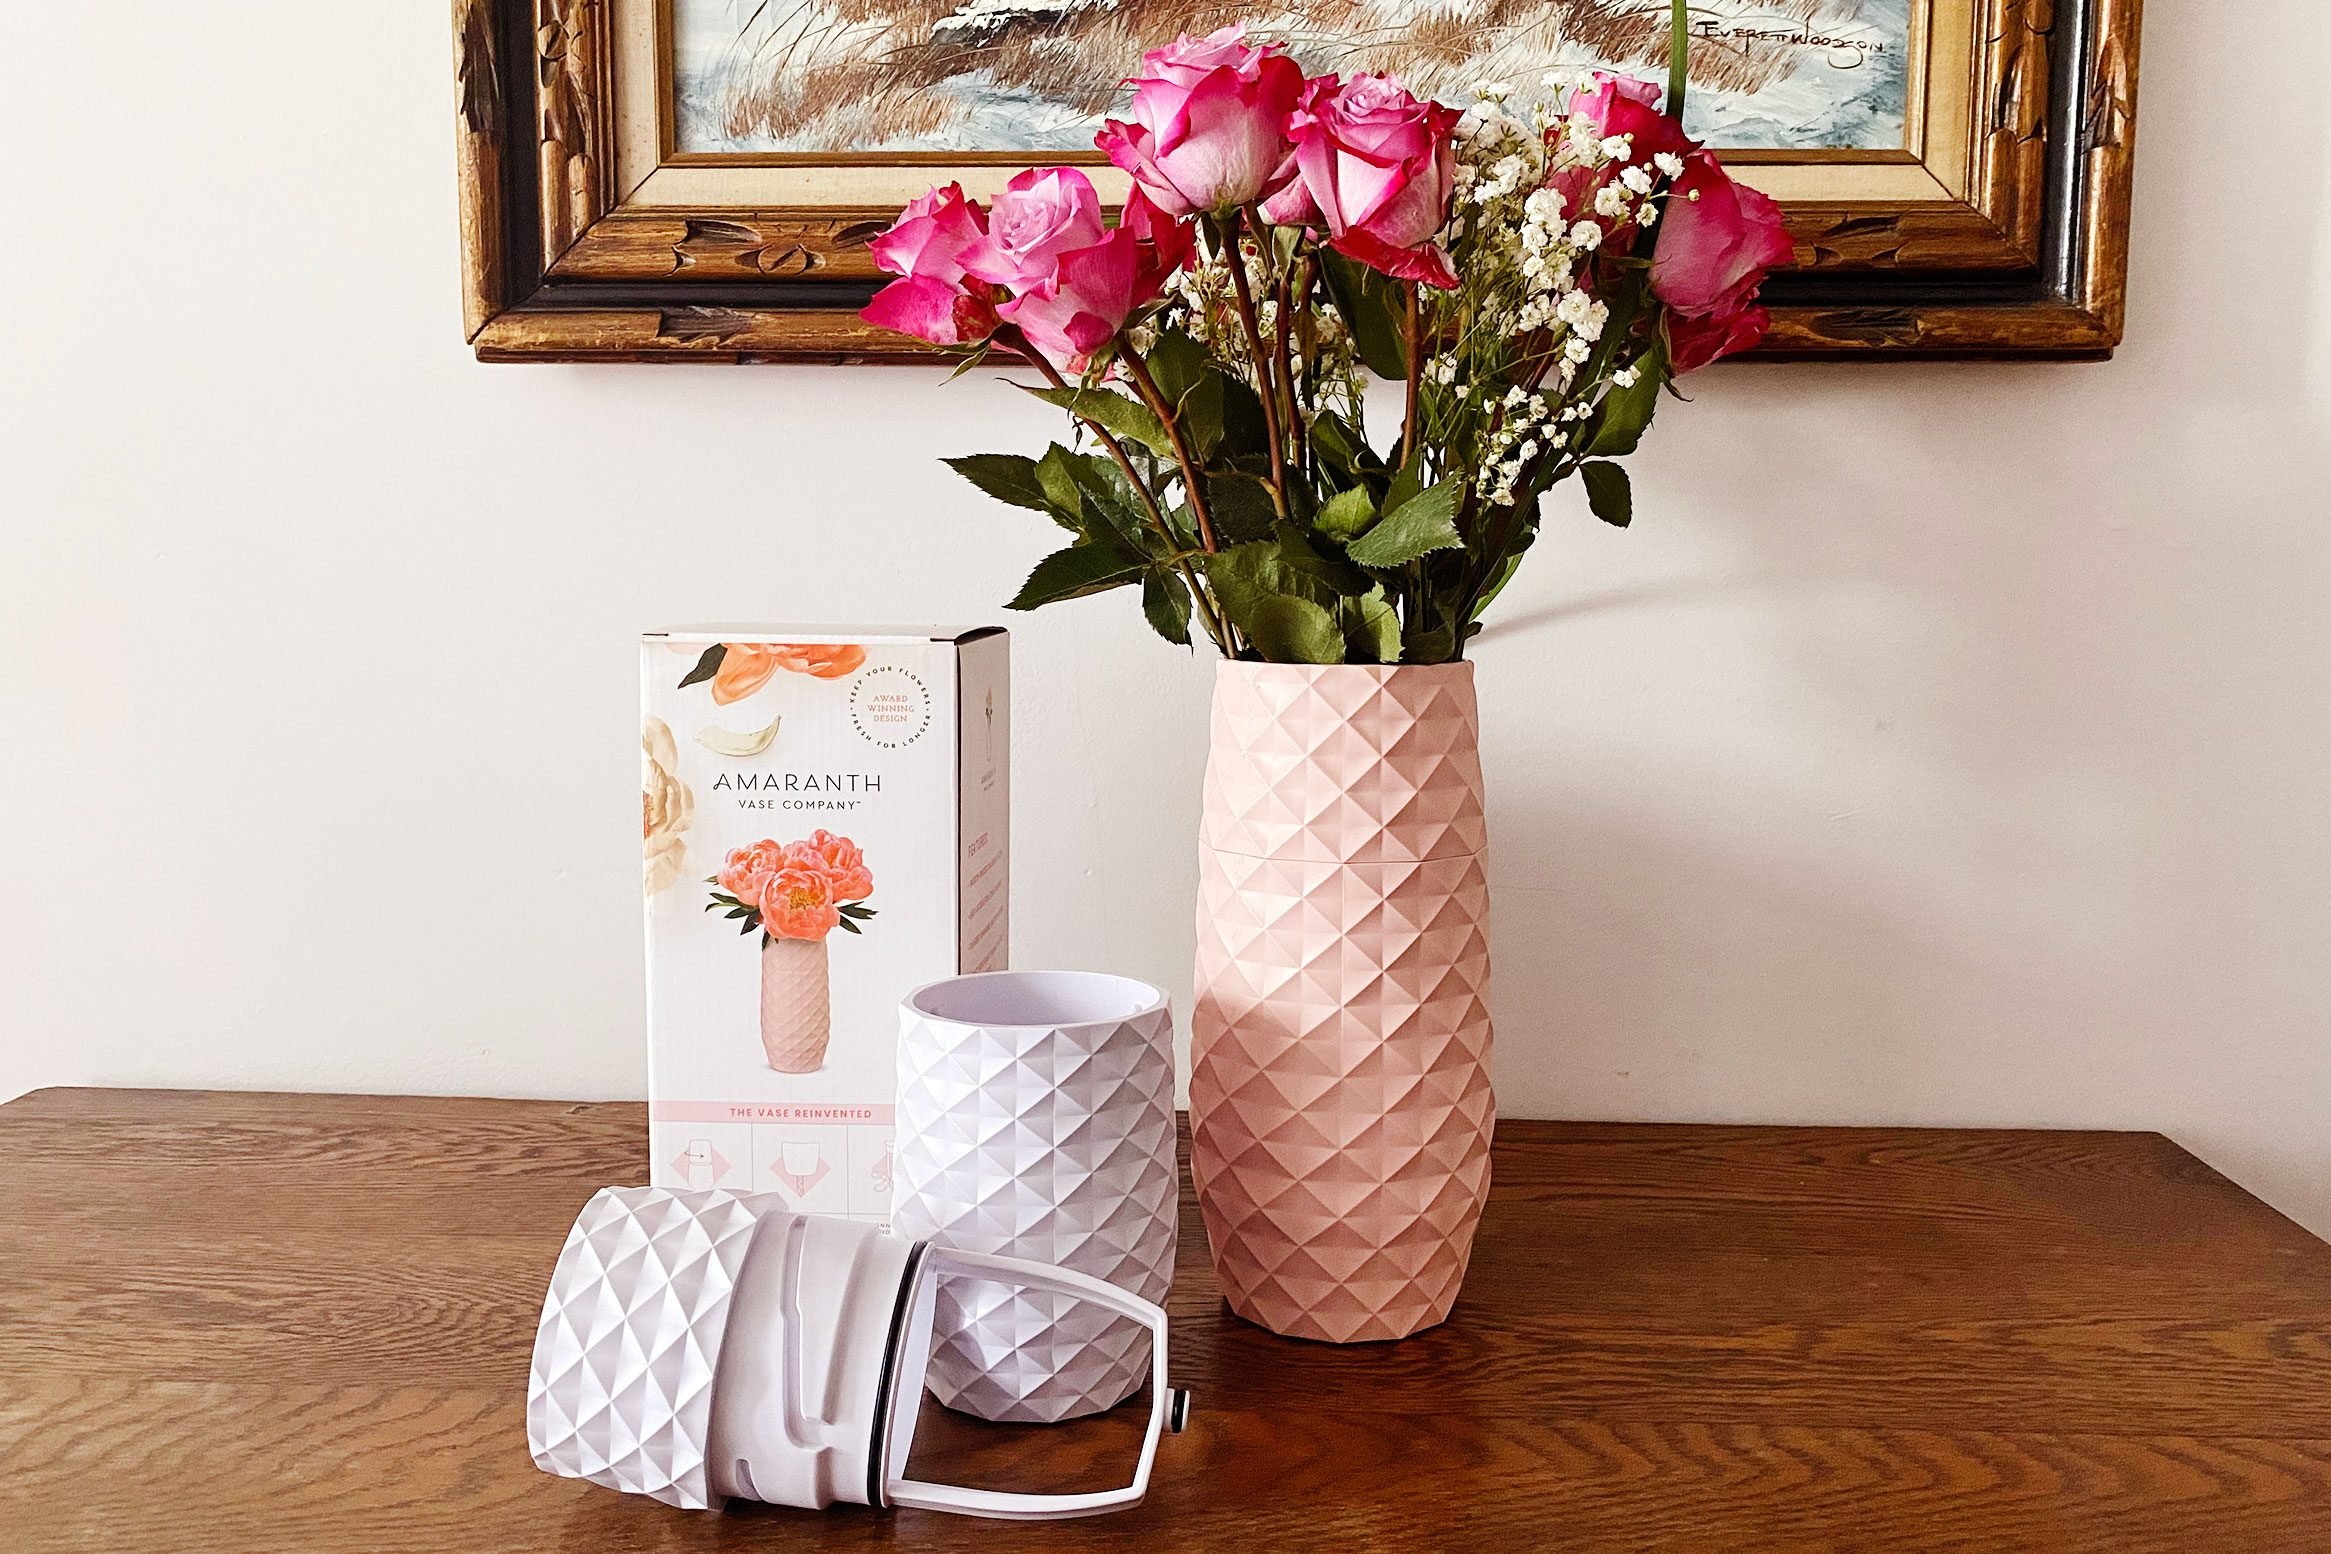 Amaranth Vase Review: I Tried the Vase Designed to Keep Flowers Fresh